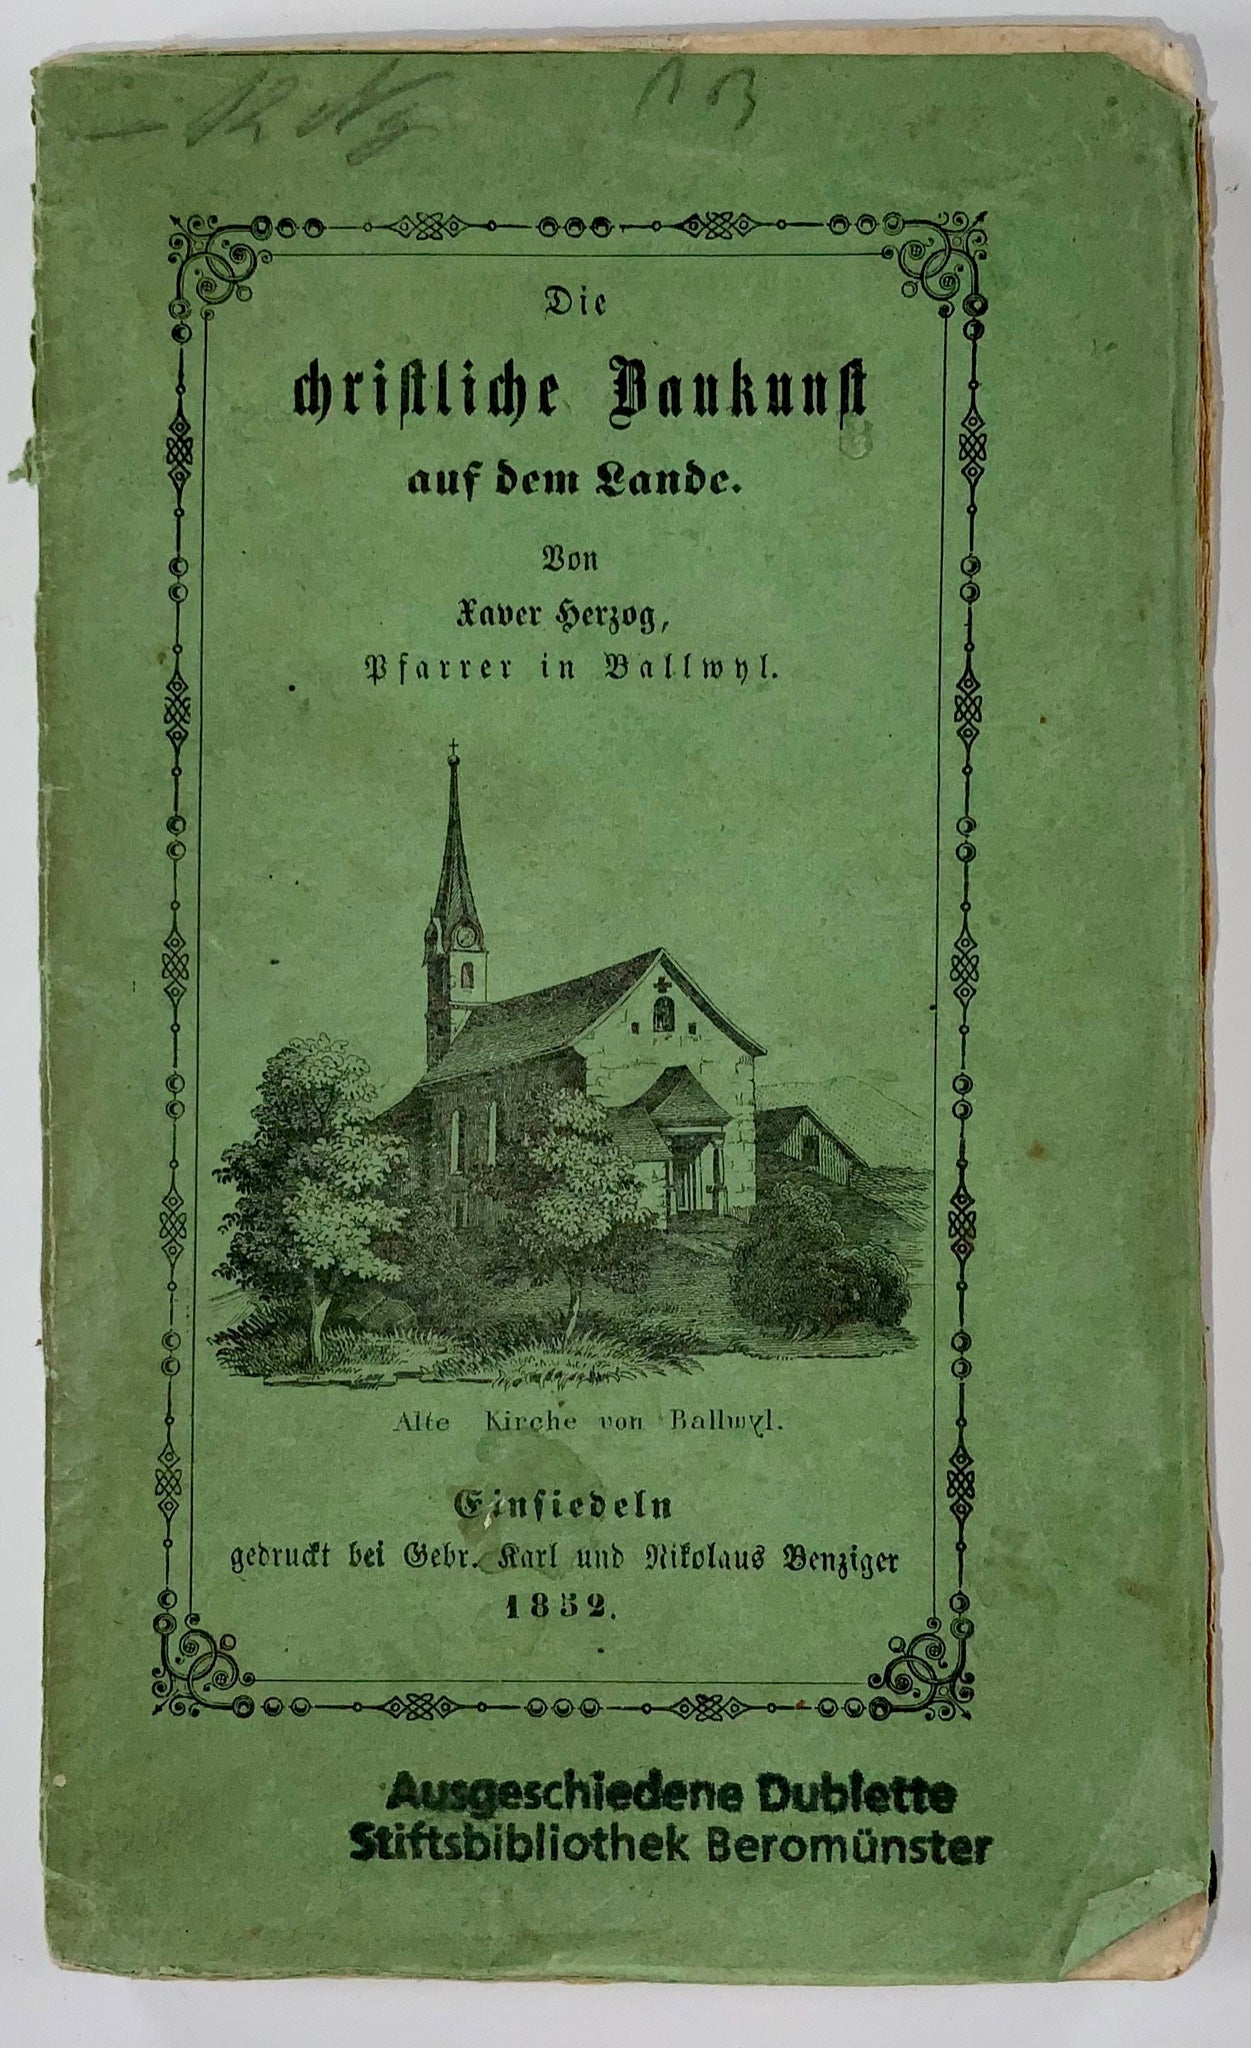 1852 Architettura delle chiese rurali in Svizzera. Christliche Baukunst, X. Herzog, libro